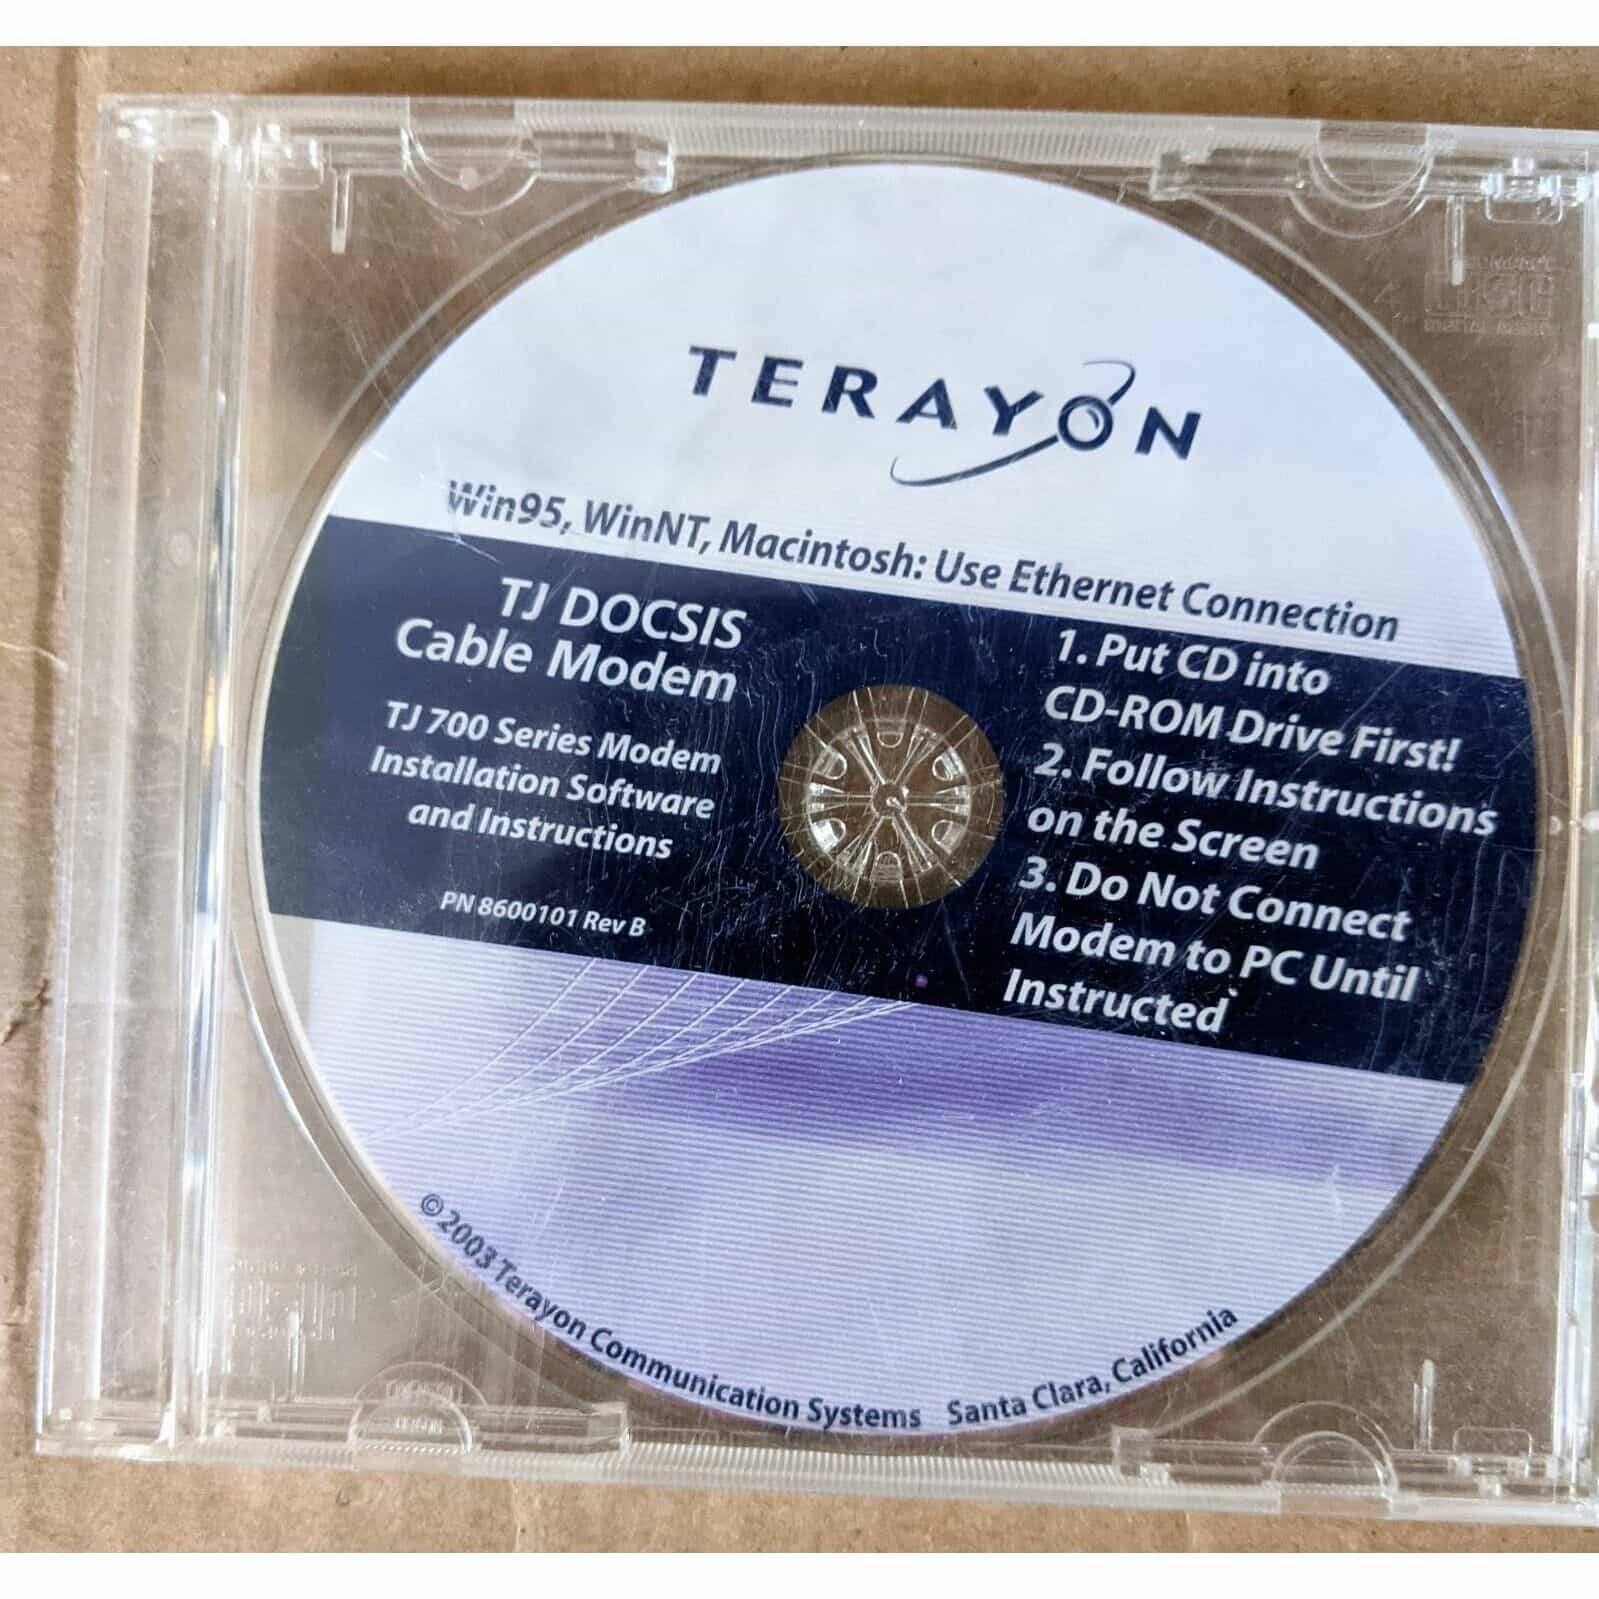 Terayon Cable Modem Driver CD